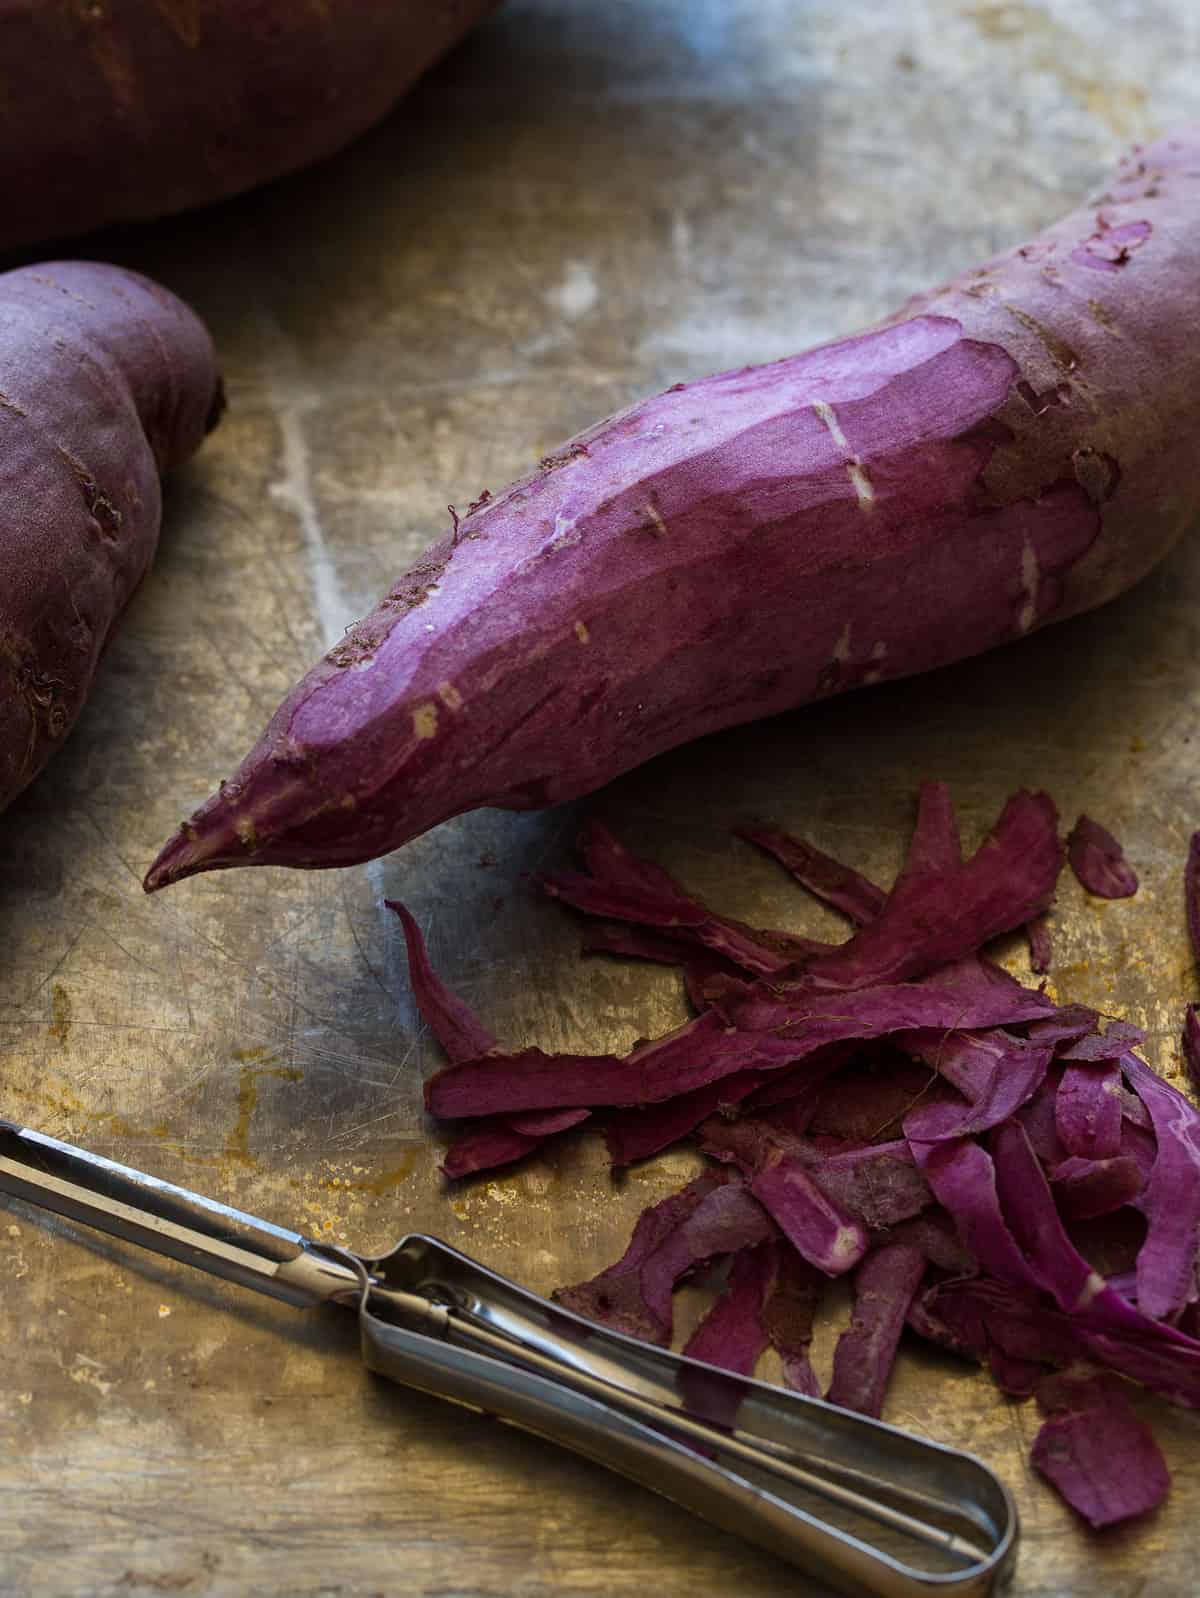 purple sweet potato